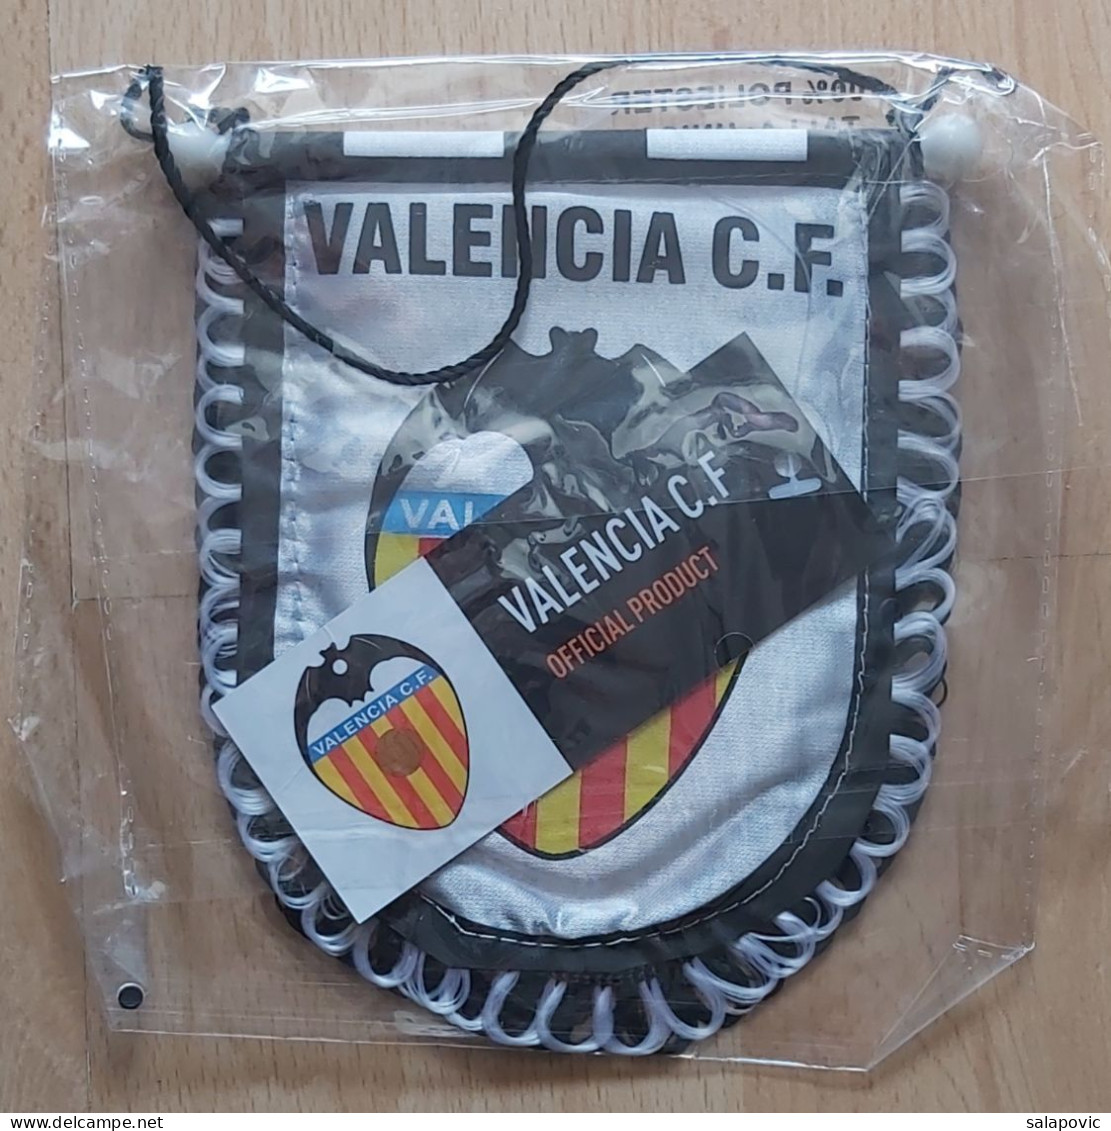 Valencia CF Spain Football club Soccer Fussball Calcio Futebol  PENNANT, SPORTS FLAG ZS 3/5 - Bekleidung, Souvenirs Und Sonstige